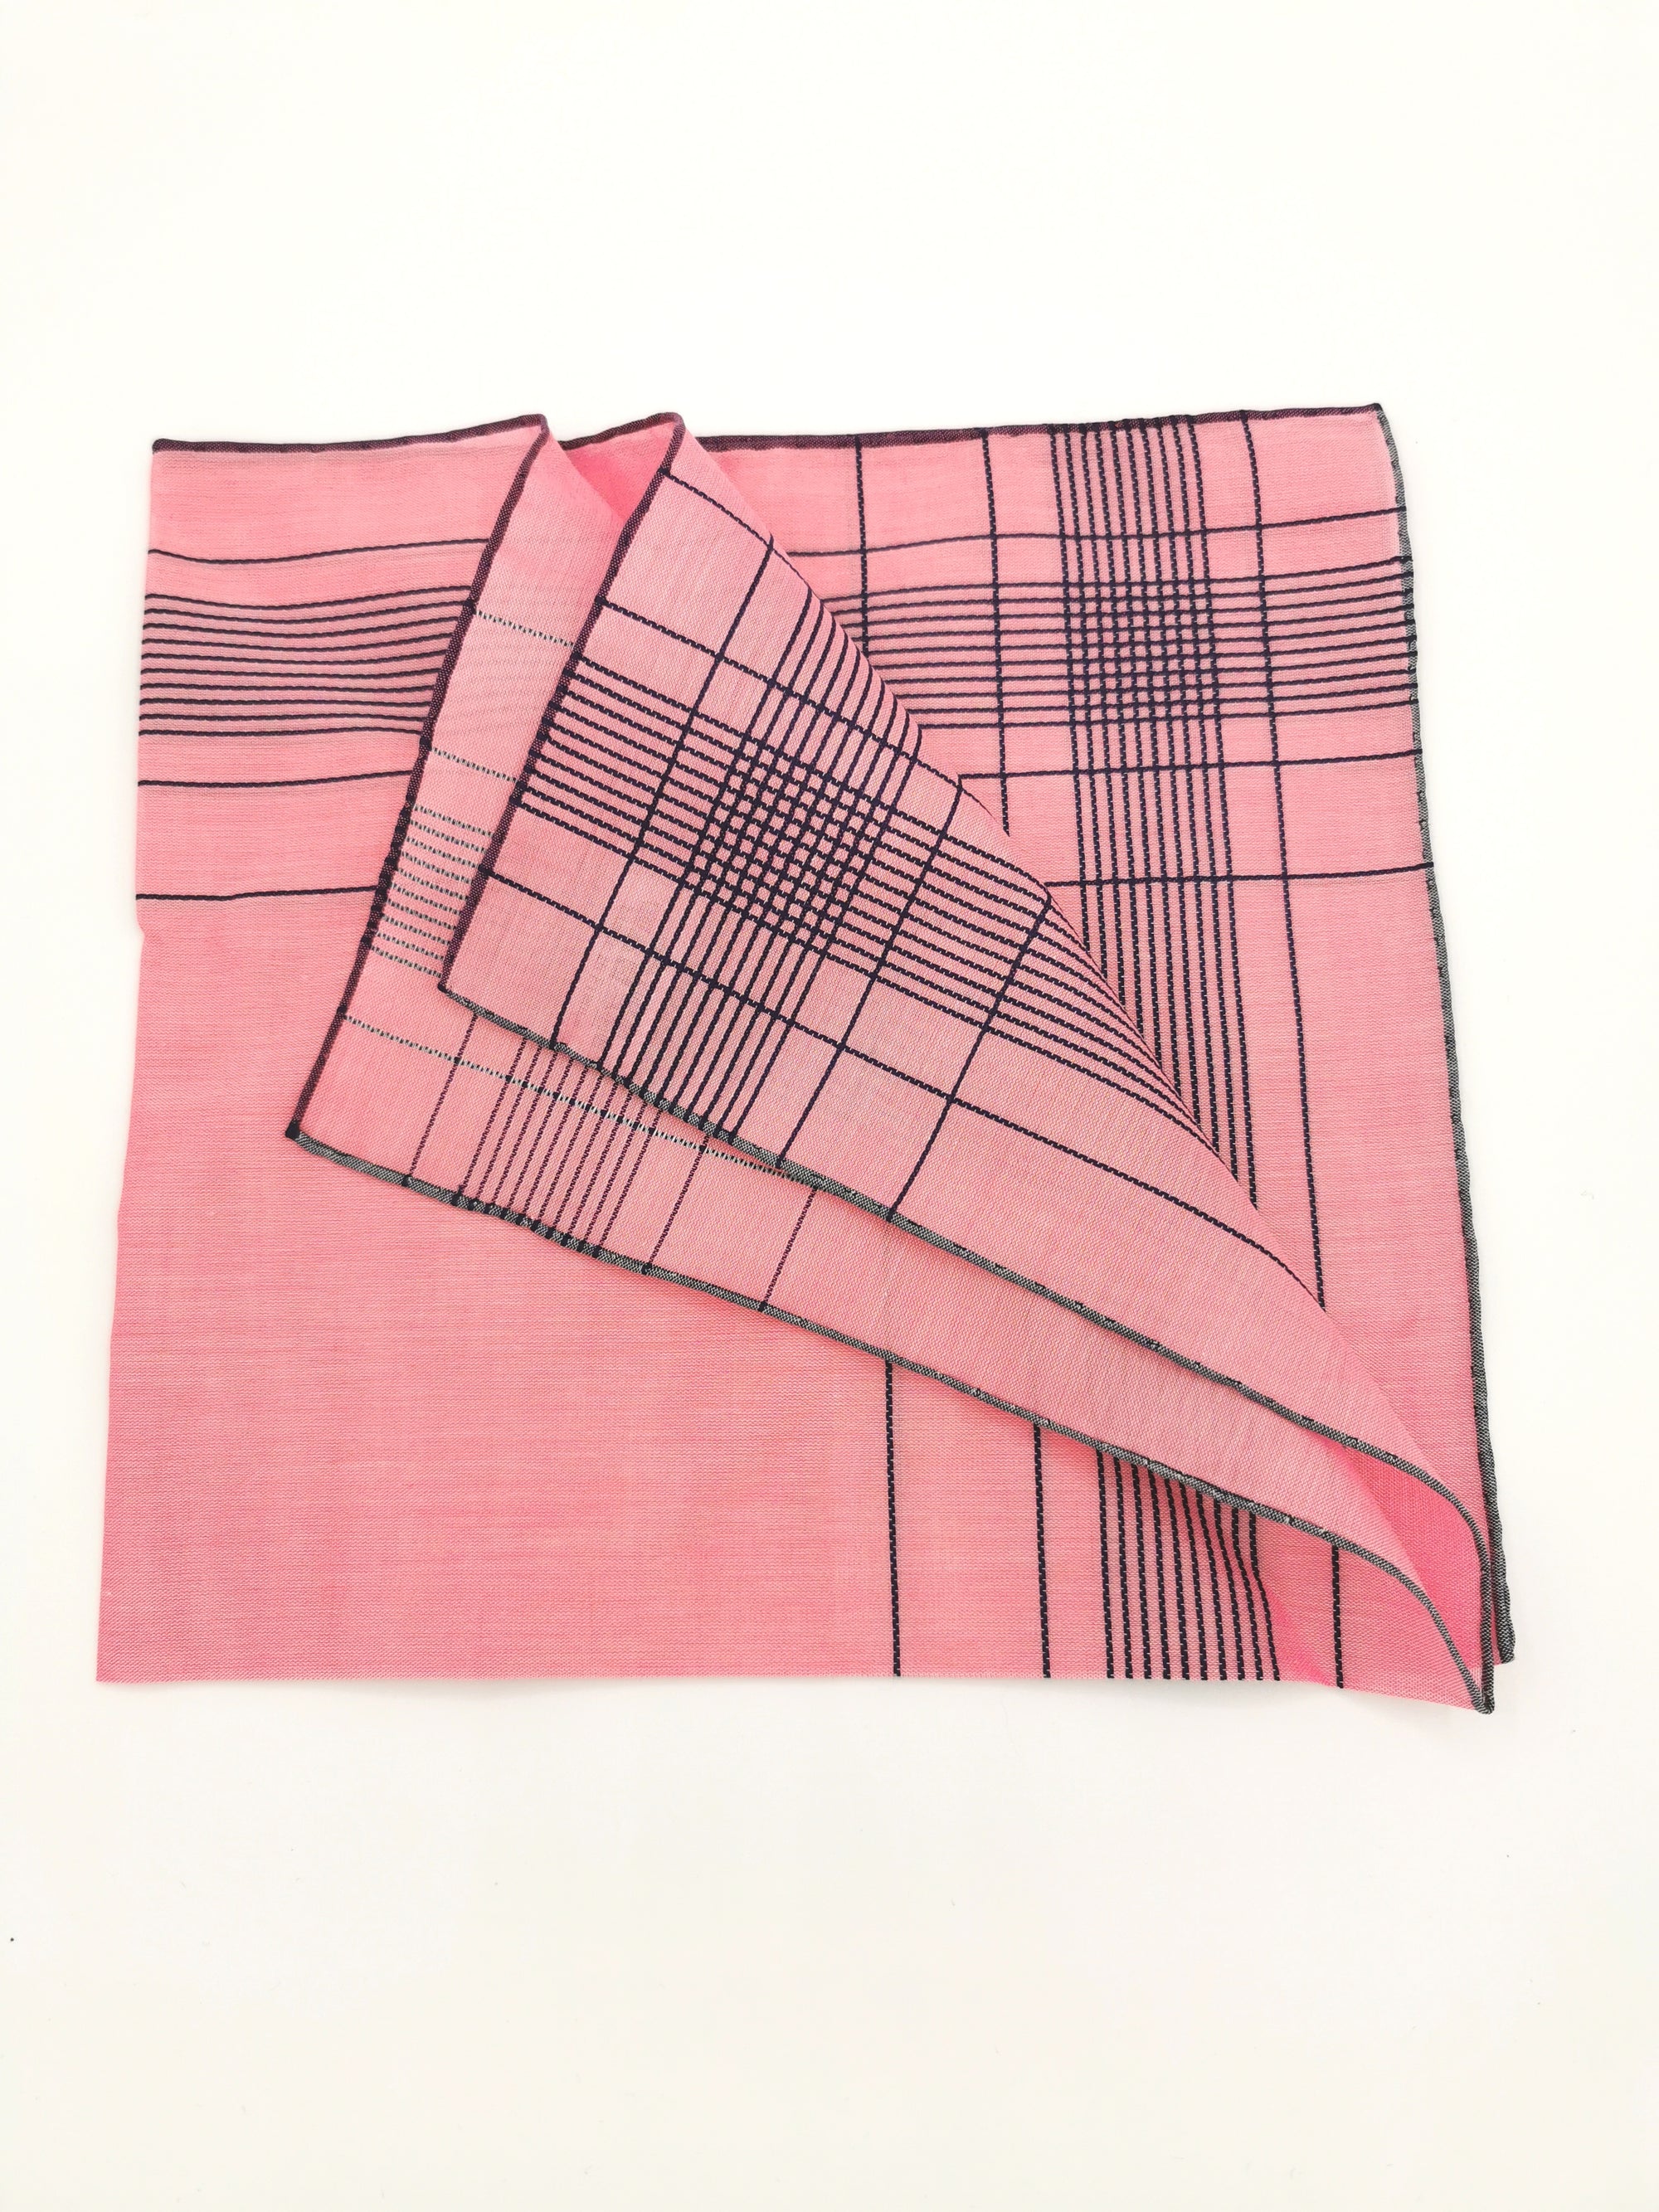 Simonnot-Godard pink pocket square with navy blue grid